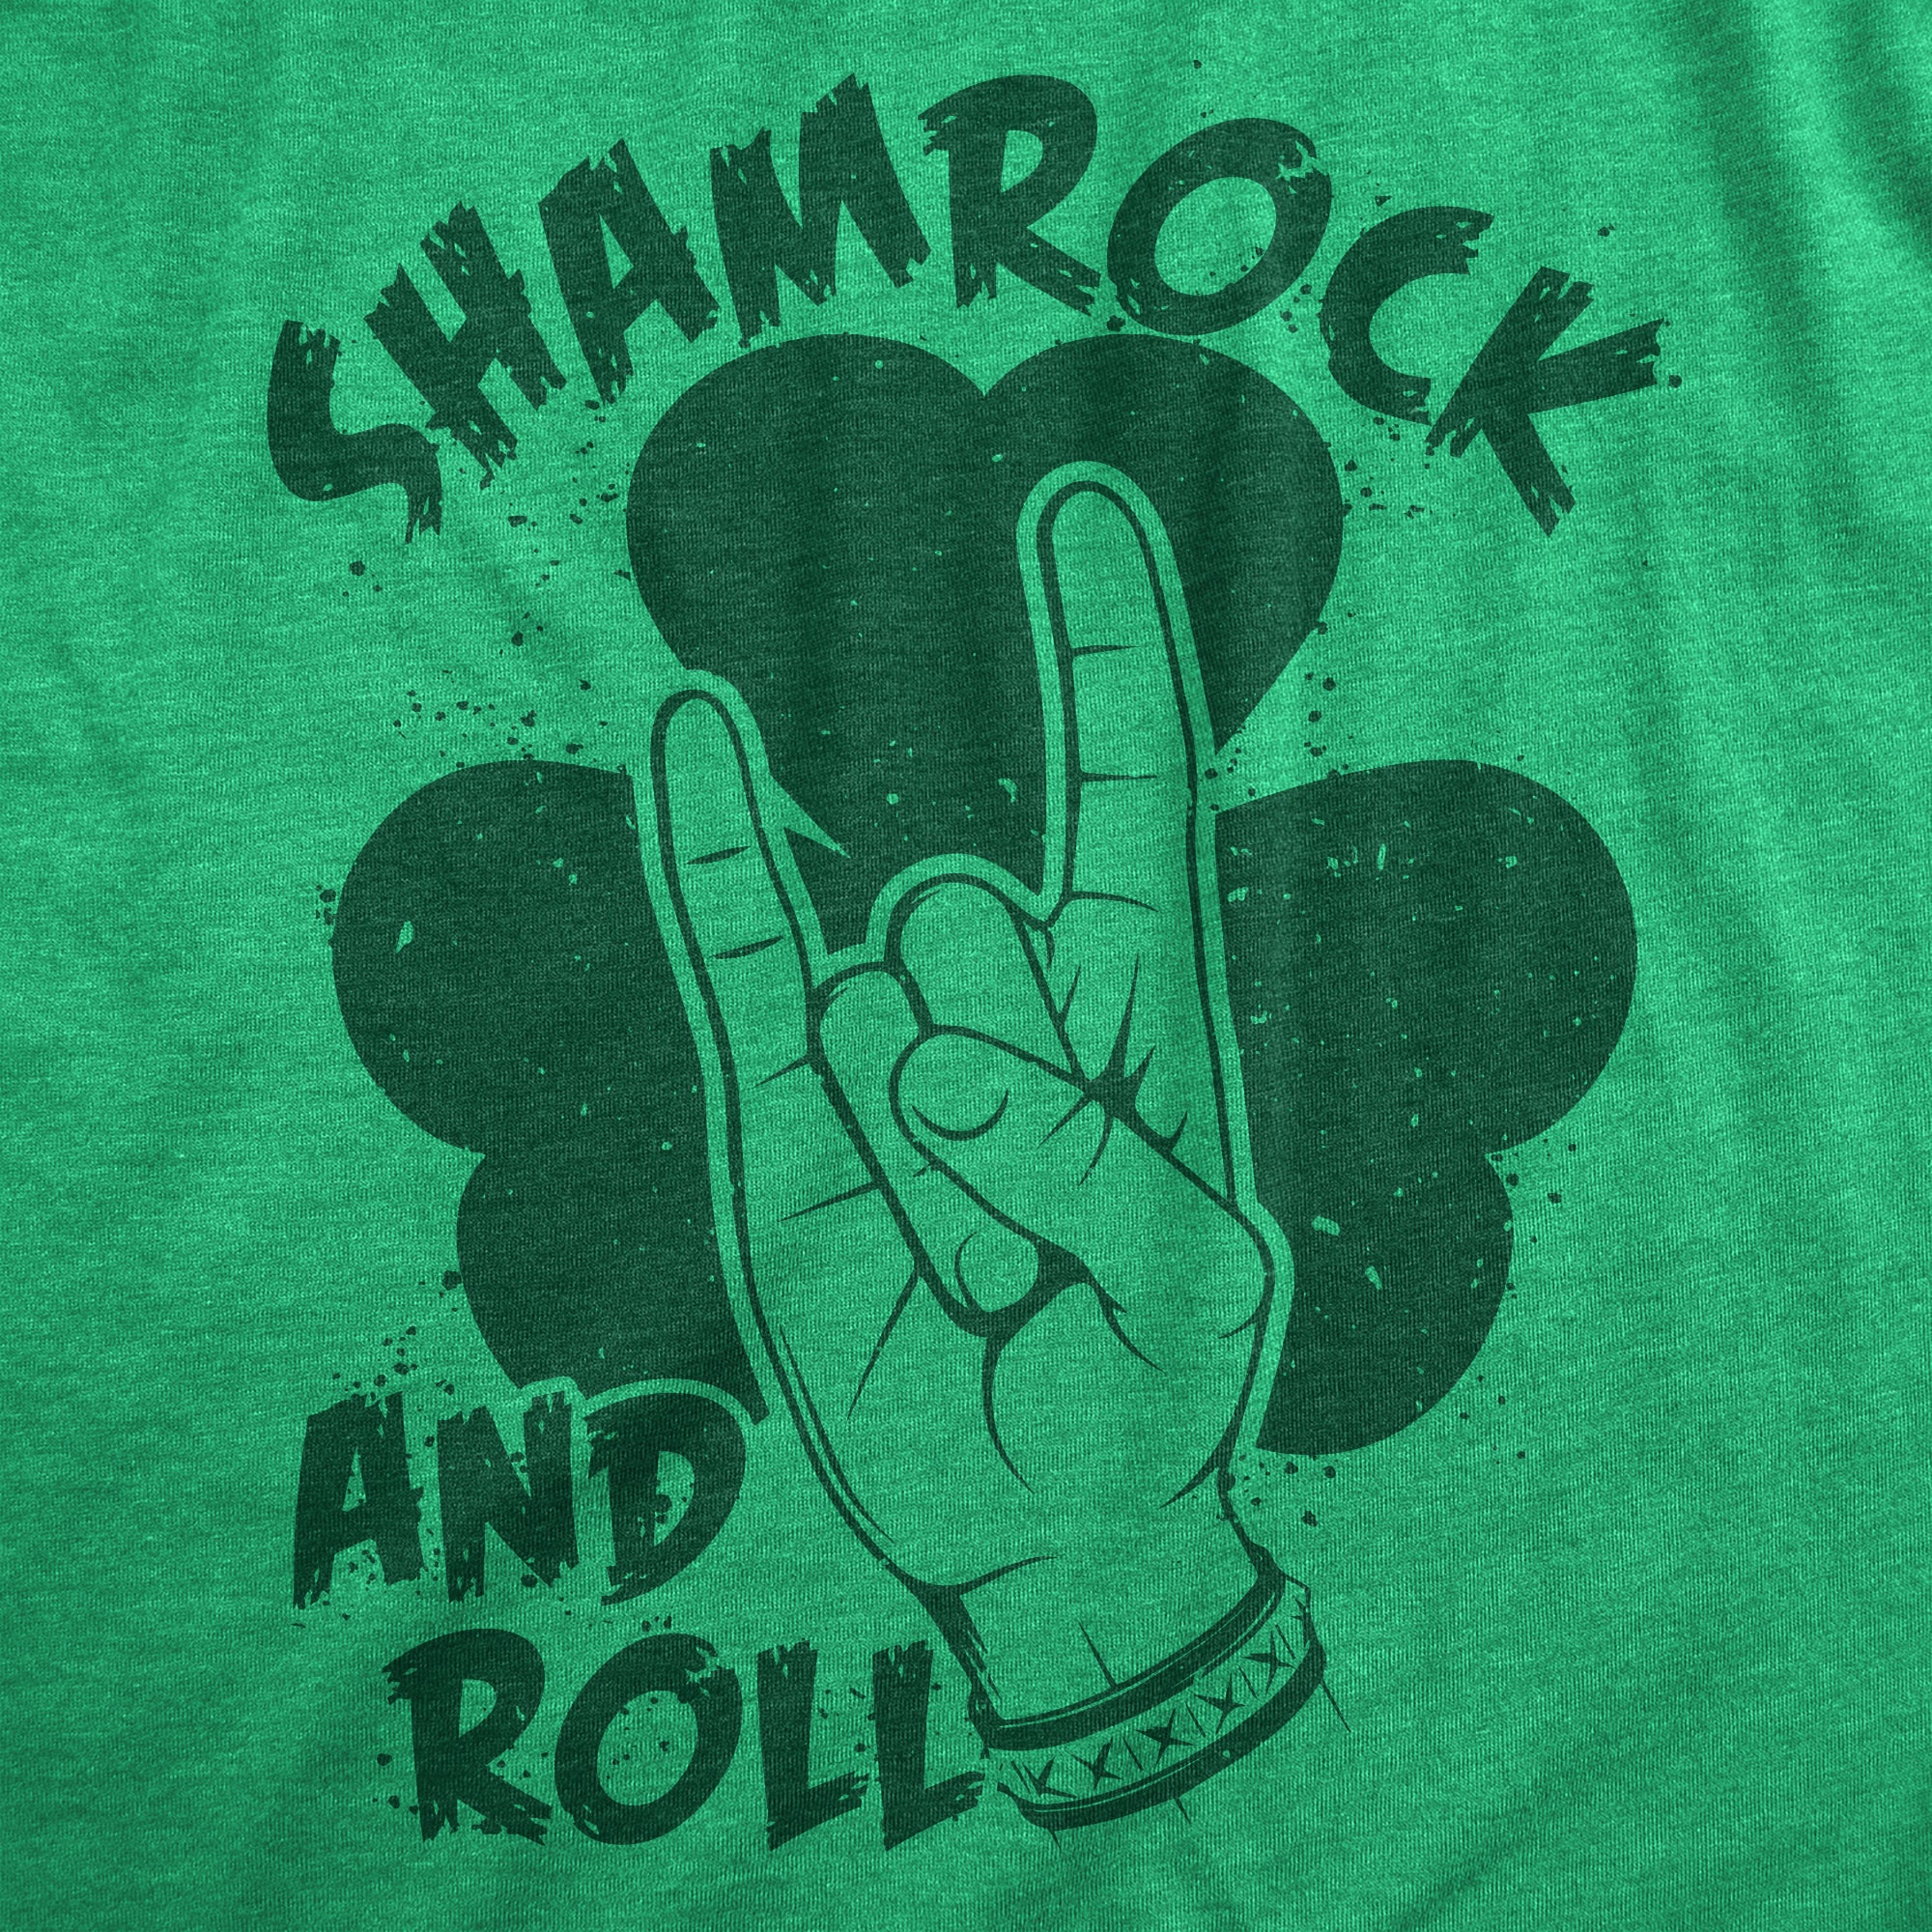 Funny Heather Green - SHAMROCK Shamrock And Roll Womens T Shirt Nerdy Saint Patrick's Day Music Tee